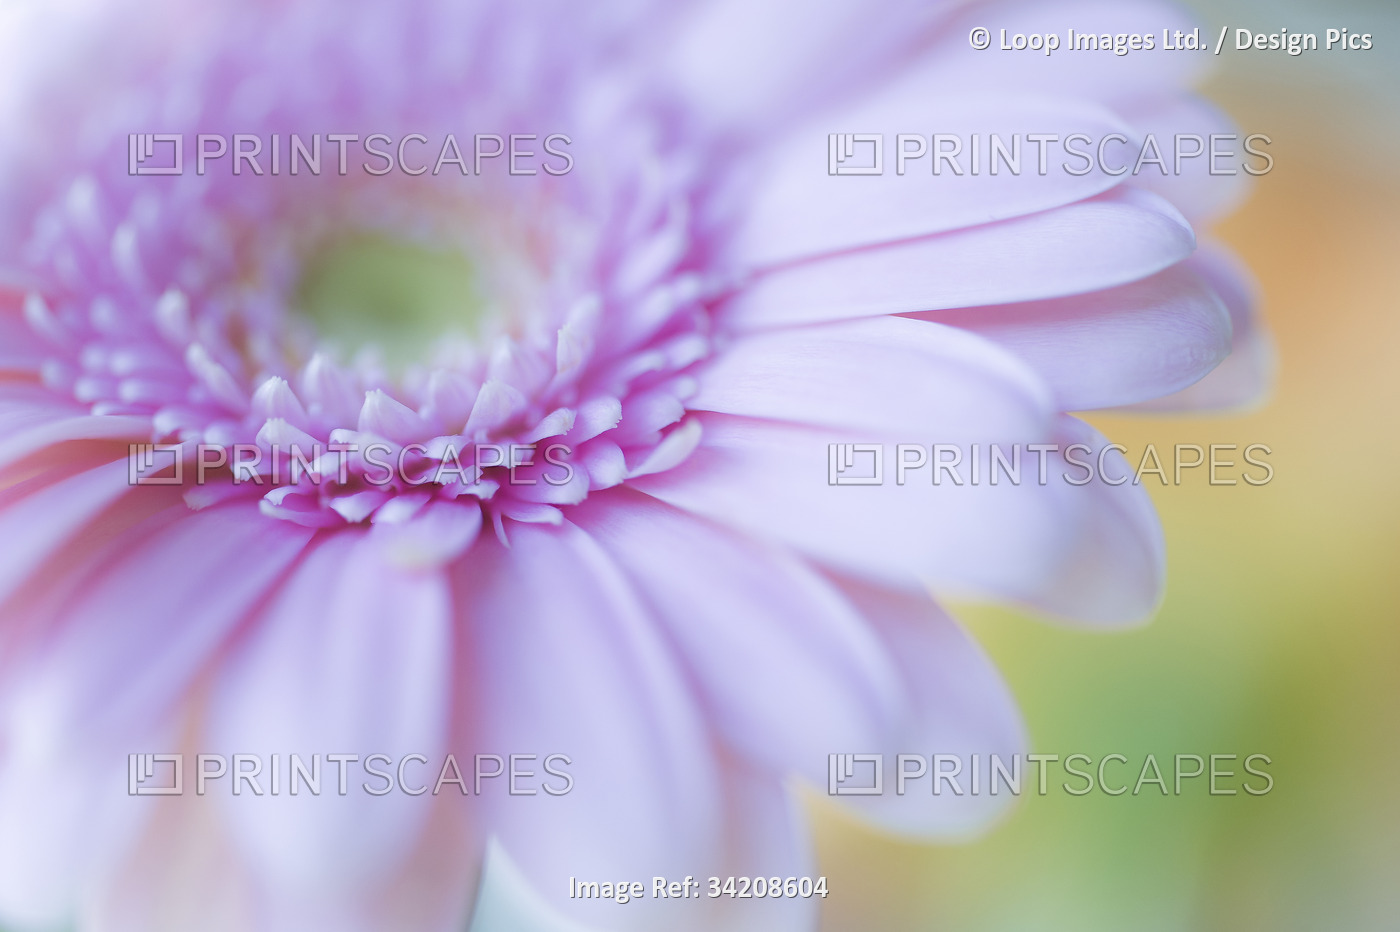 A close up view of a pink Gerbera flower.